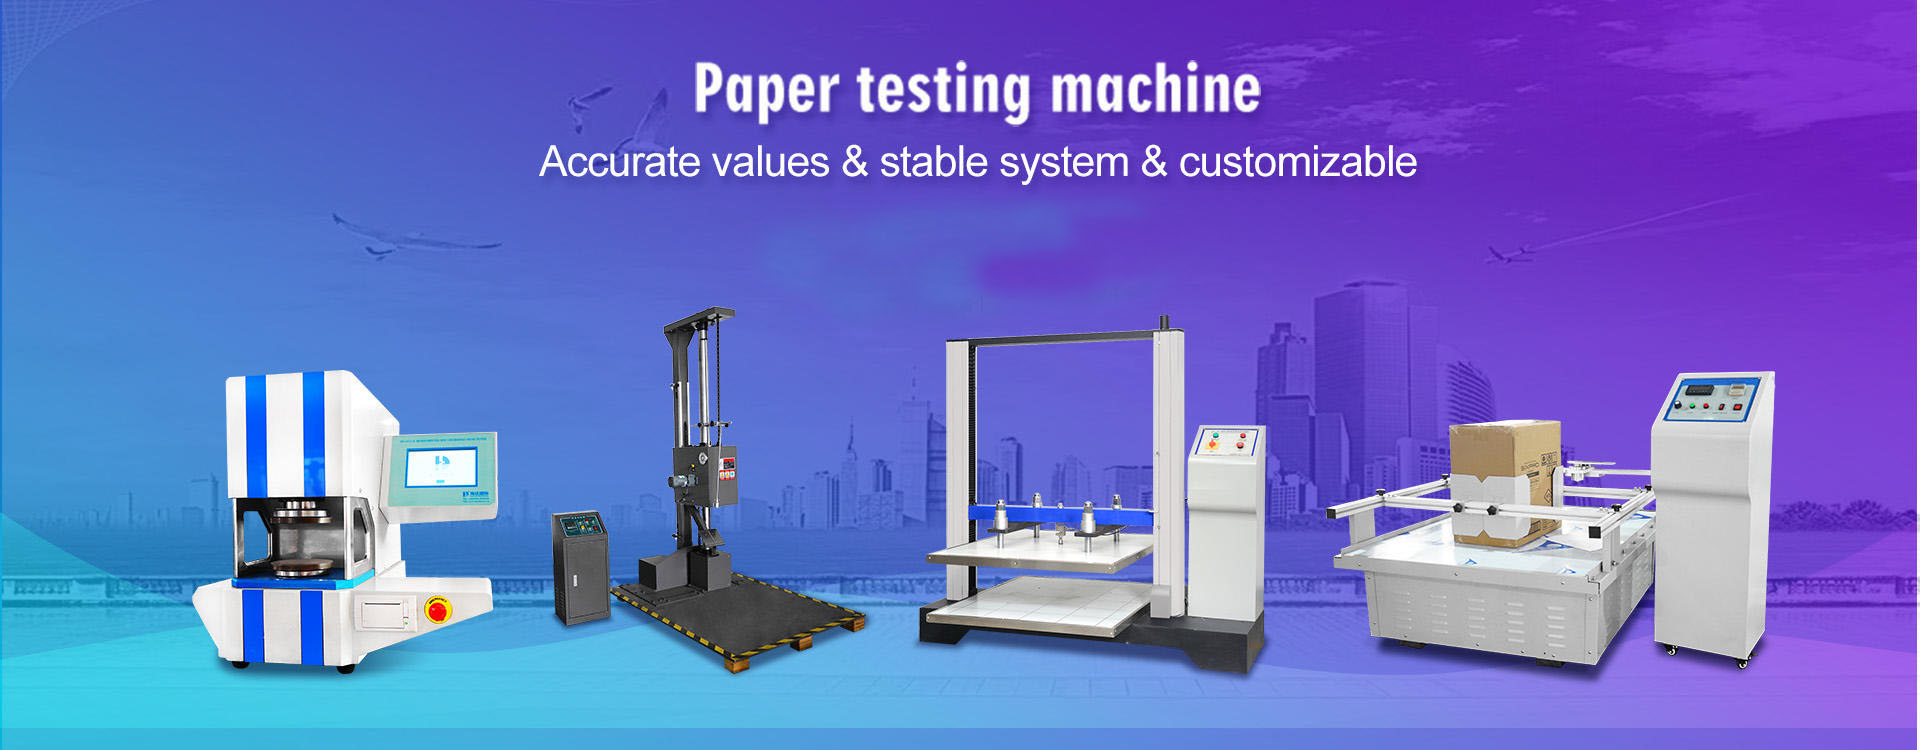 Paper testing machine